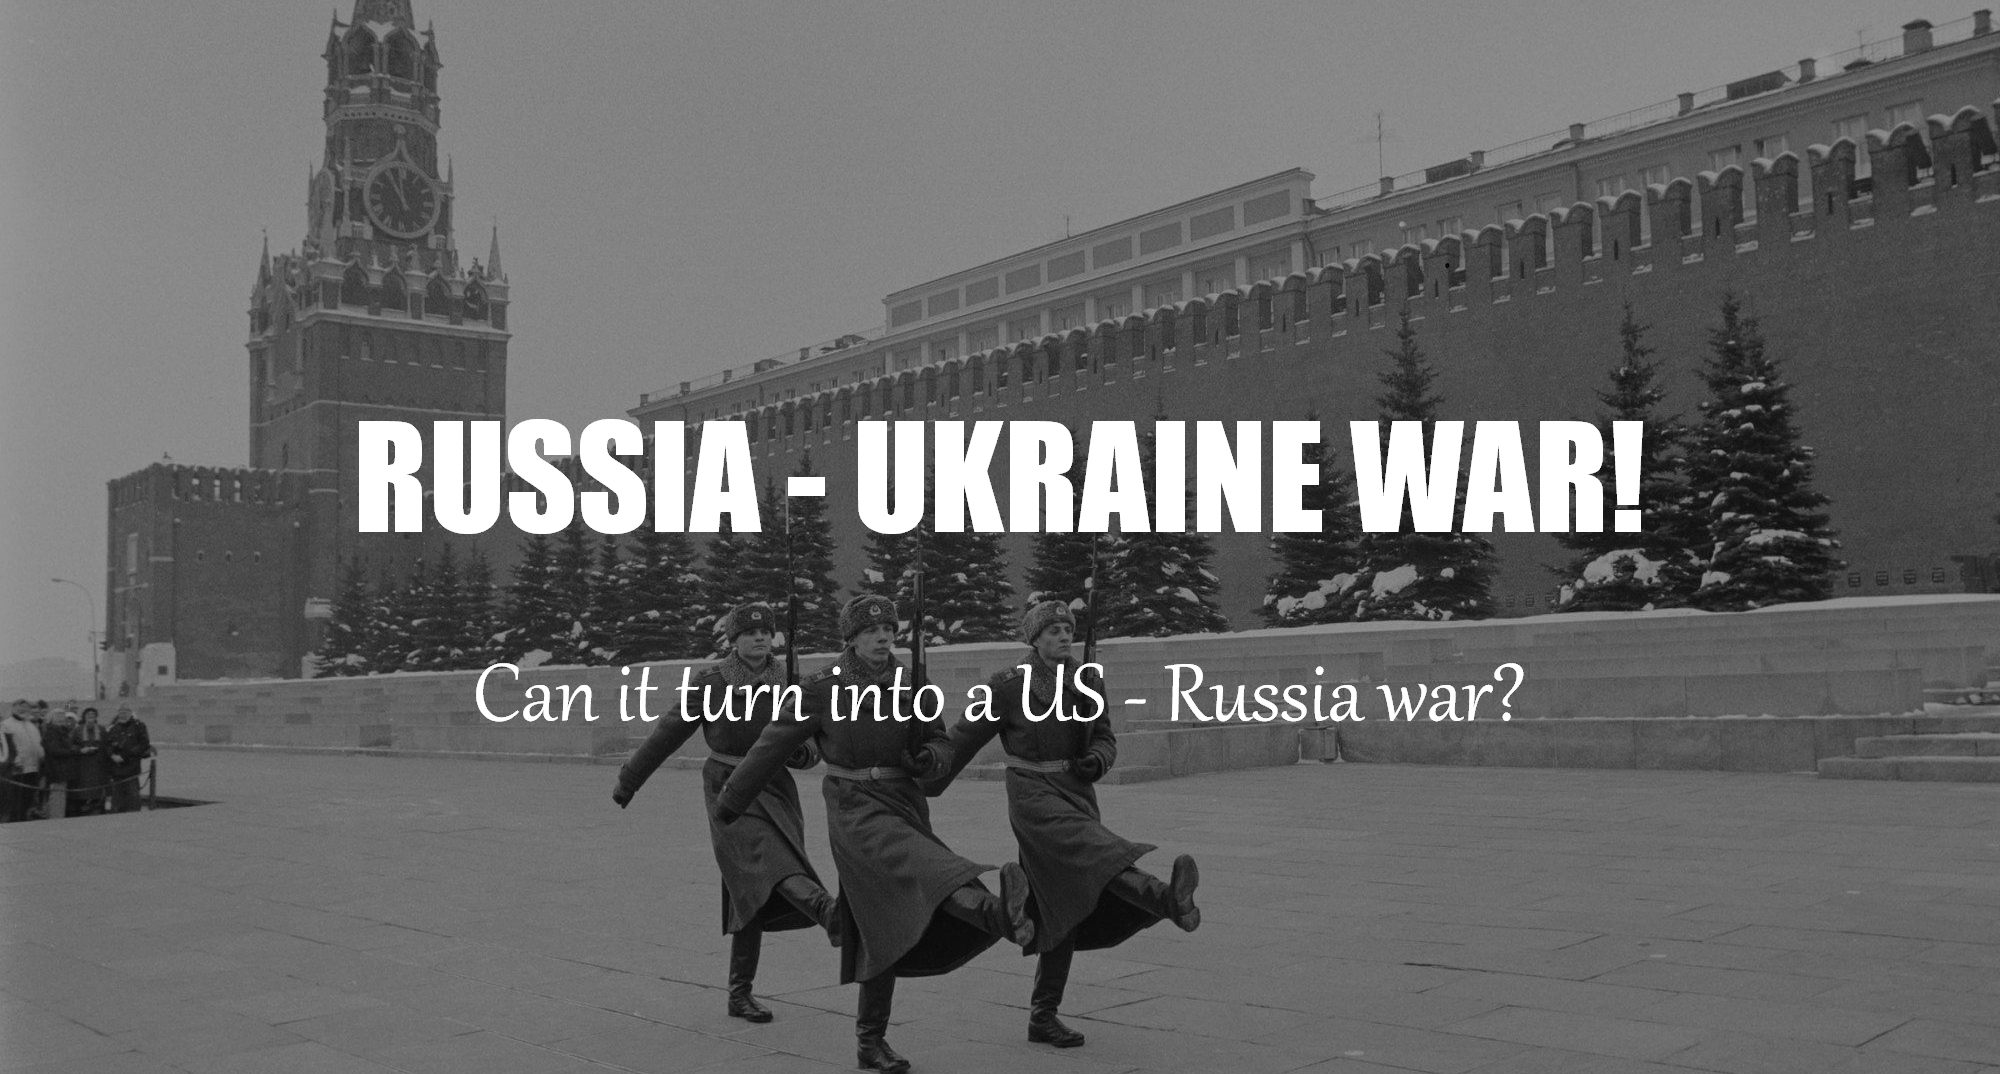 Did Russia start a major war with Ukraine? How do we stop a U.S. - Russia war escalation?